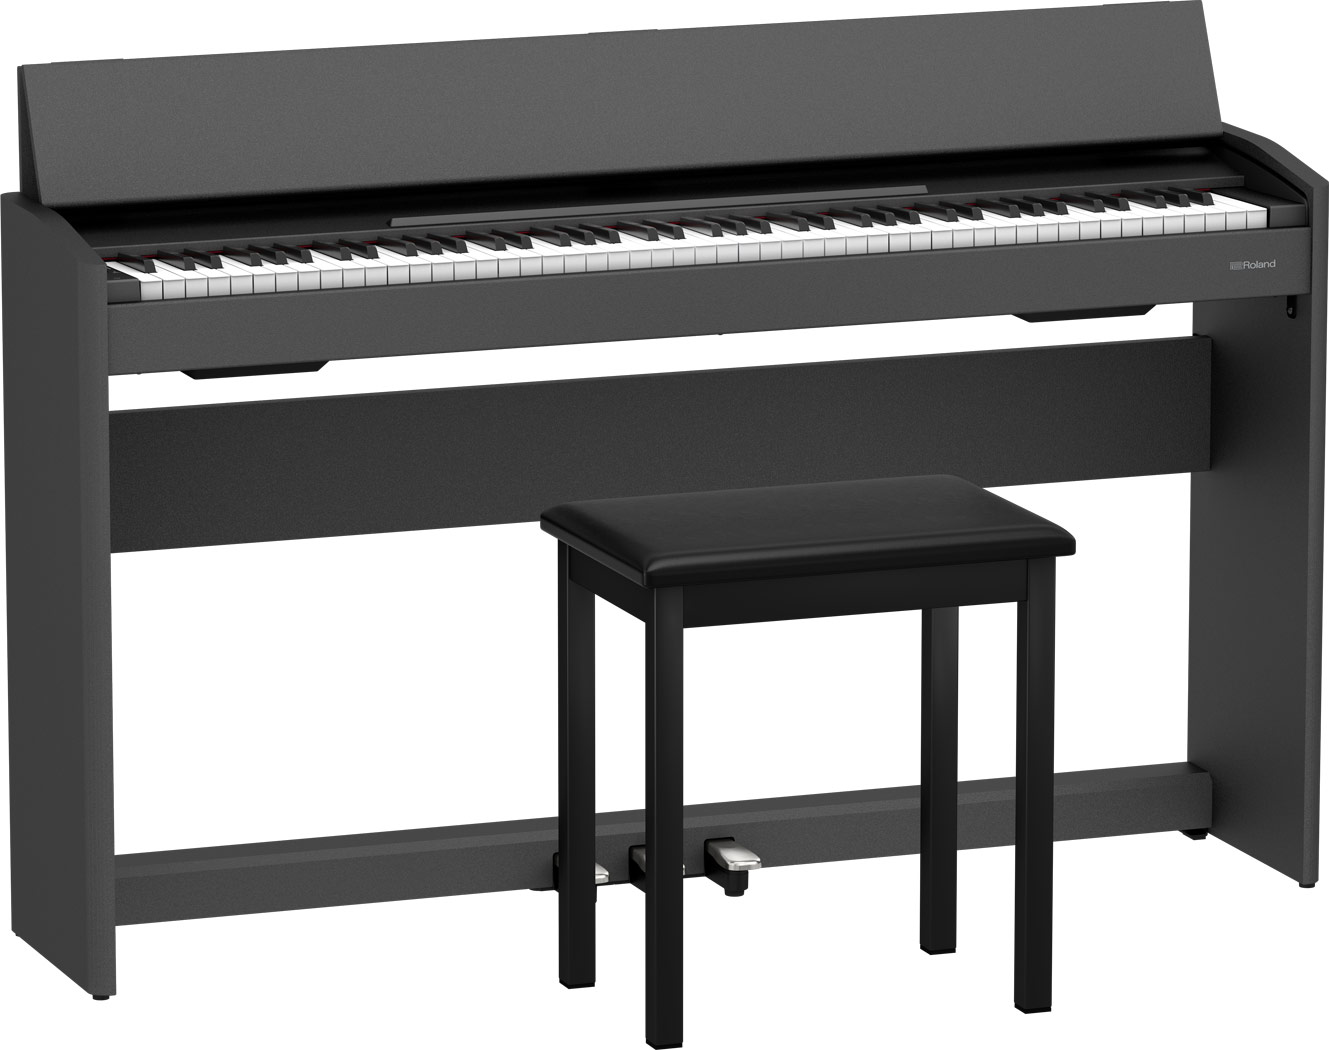 B.B. Music オンラインショップ / ローランド F107 / roland 電子ピアノ デジタルピアノ F-107 固定椅子付 配送設置無料  スマートフォンやタブレットとBluetooth接続可能